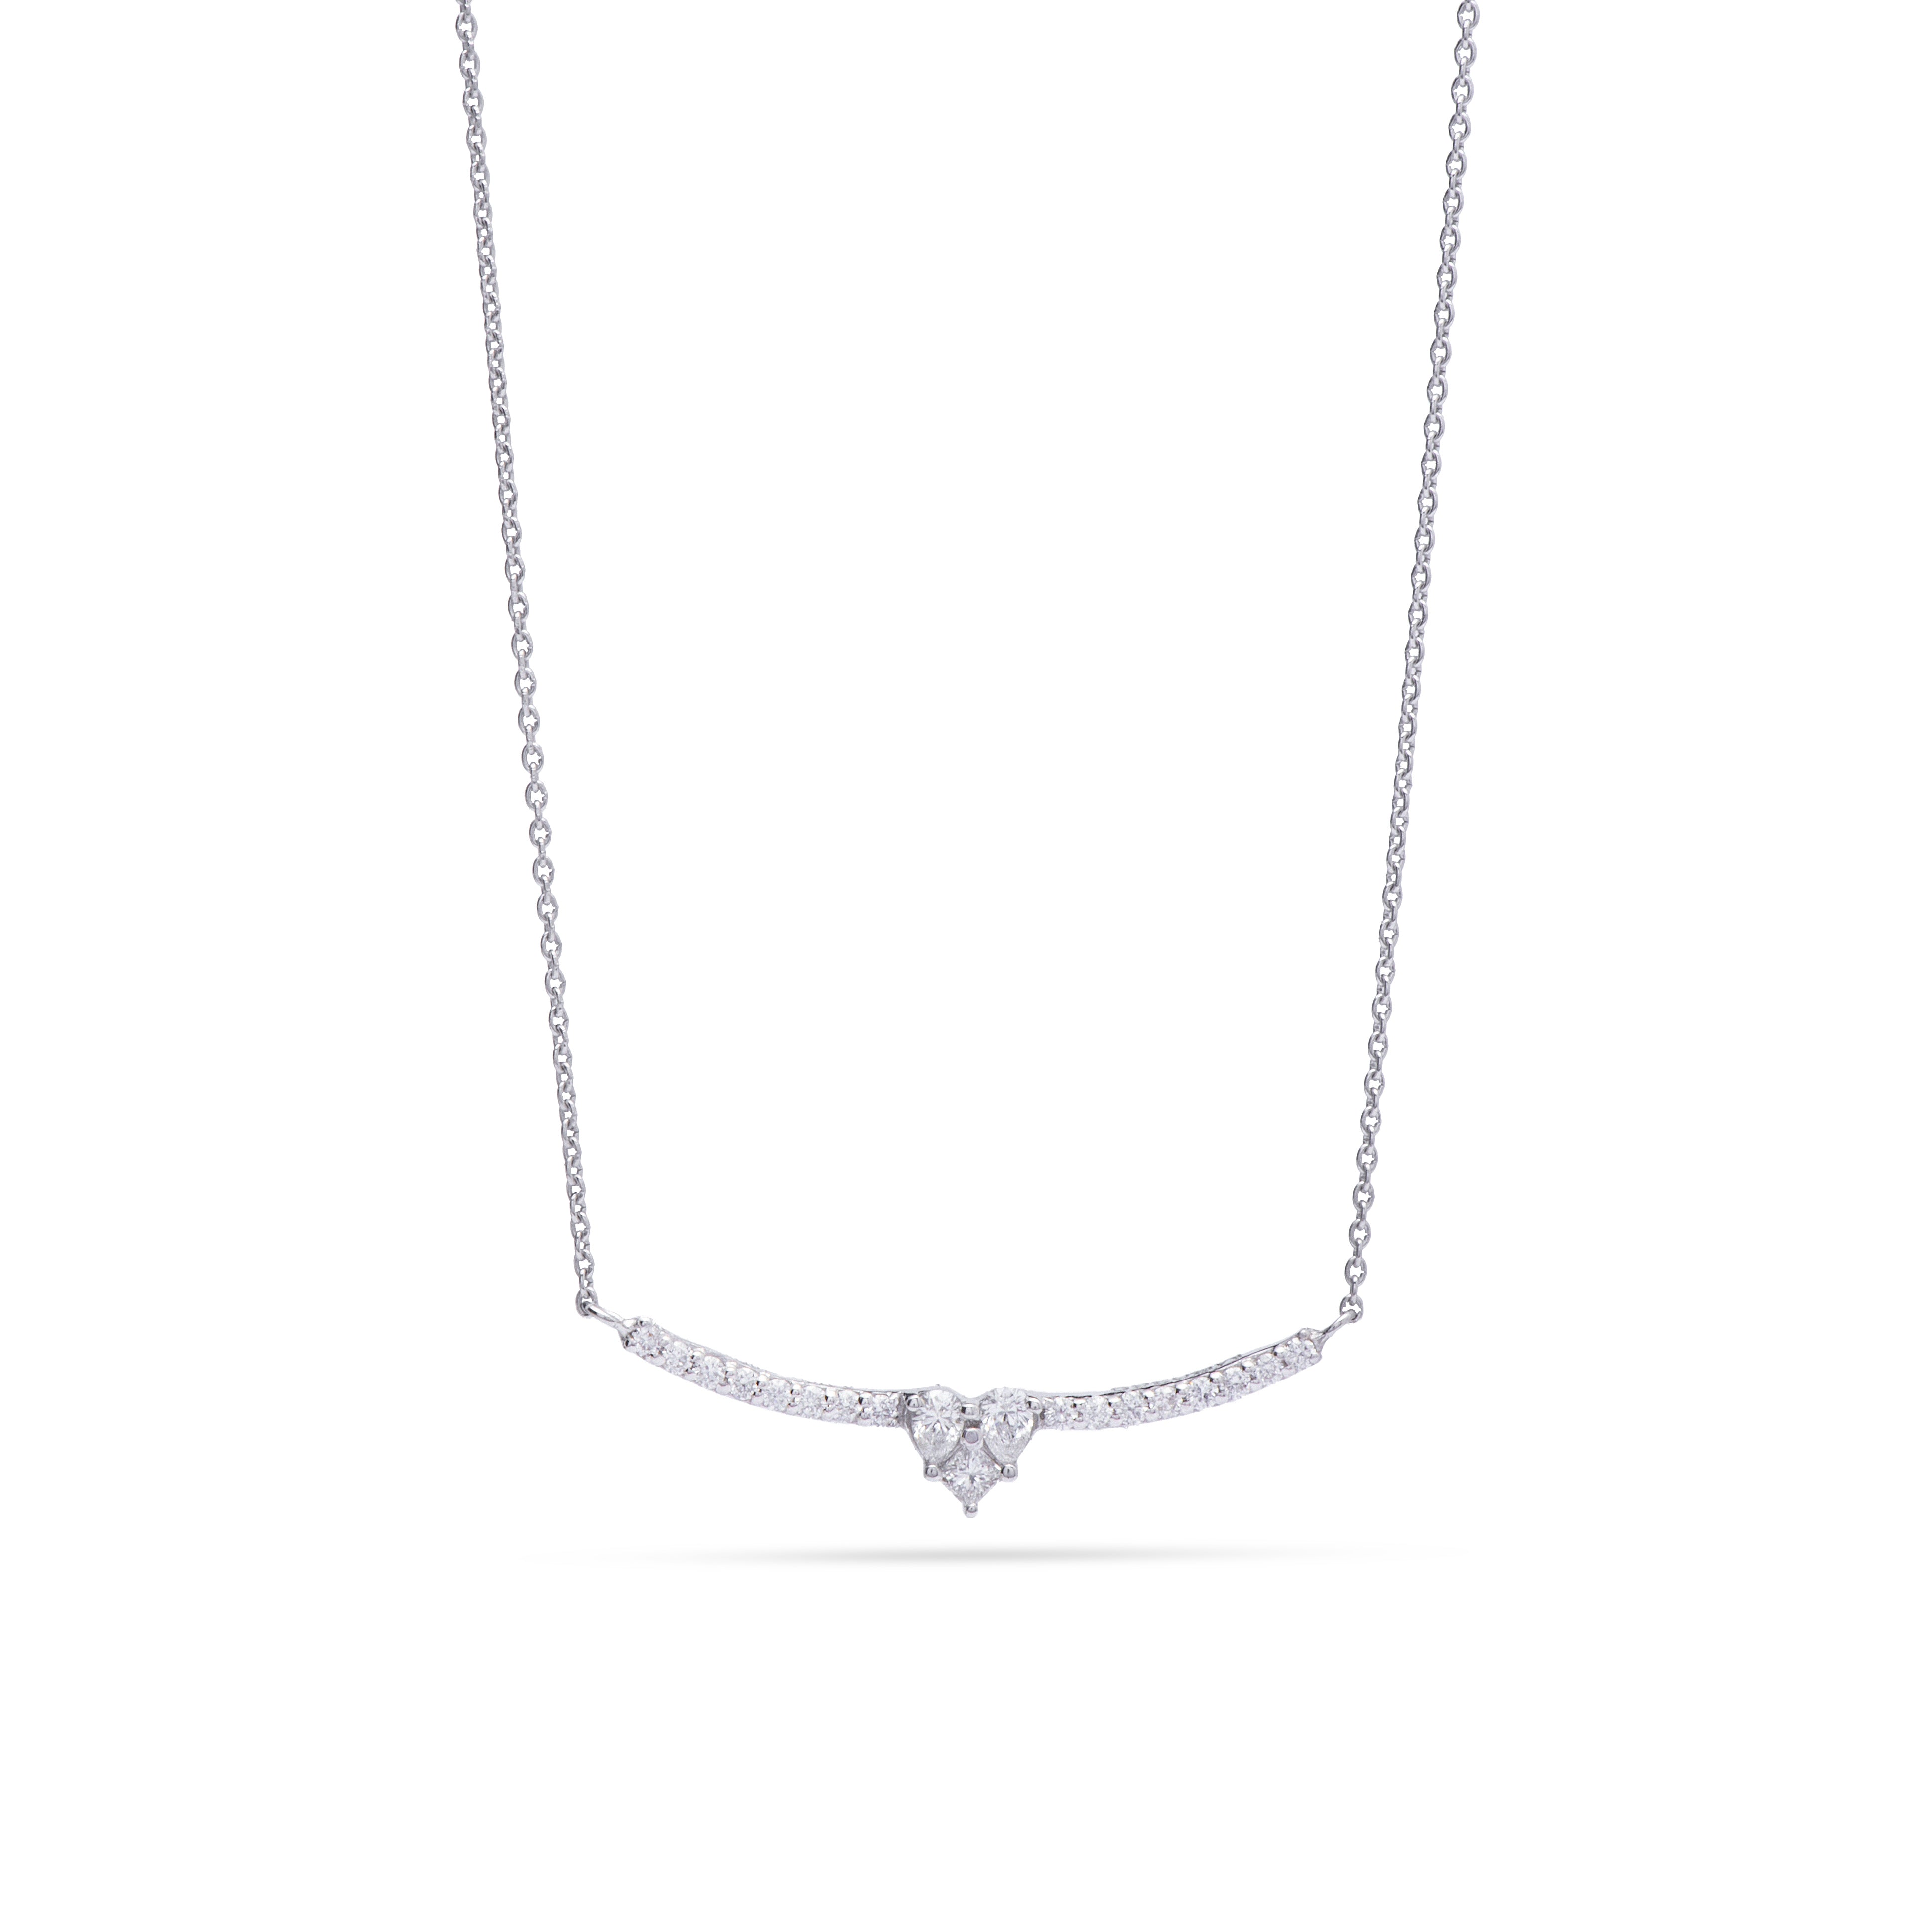 Celestial diamond bar necklace in white 18K White gold - SIR1251